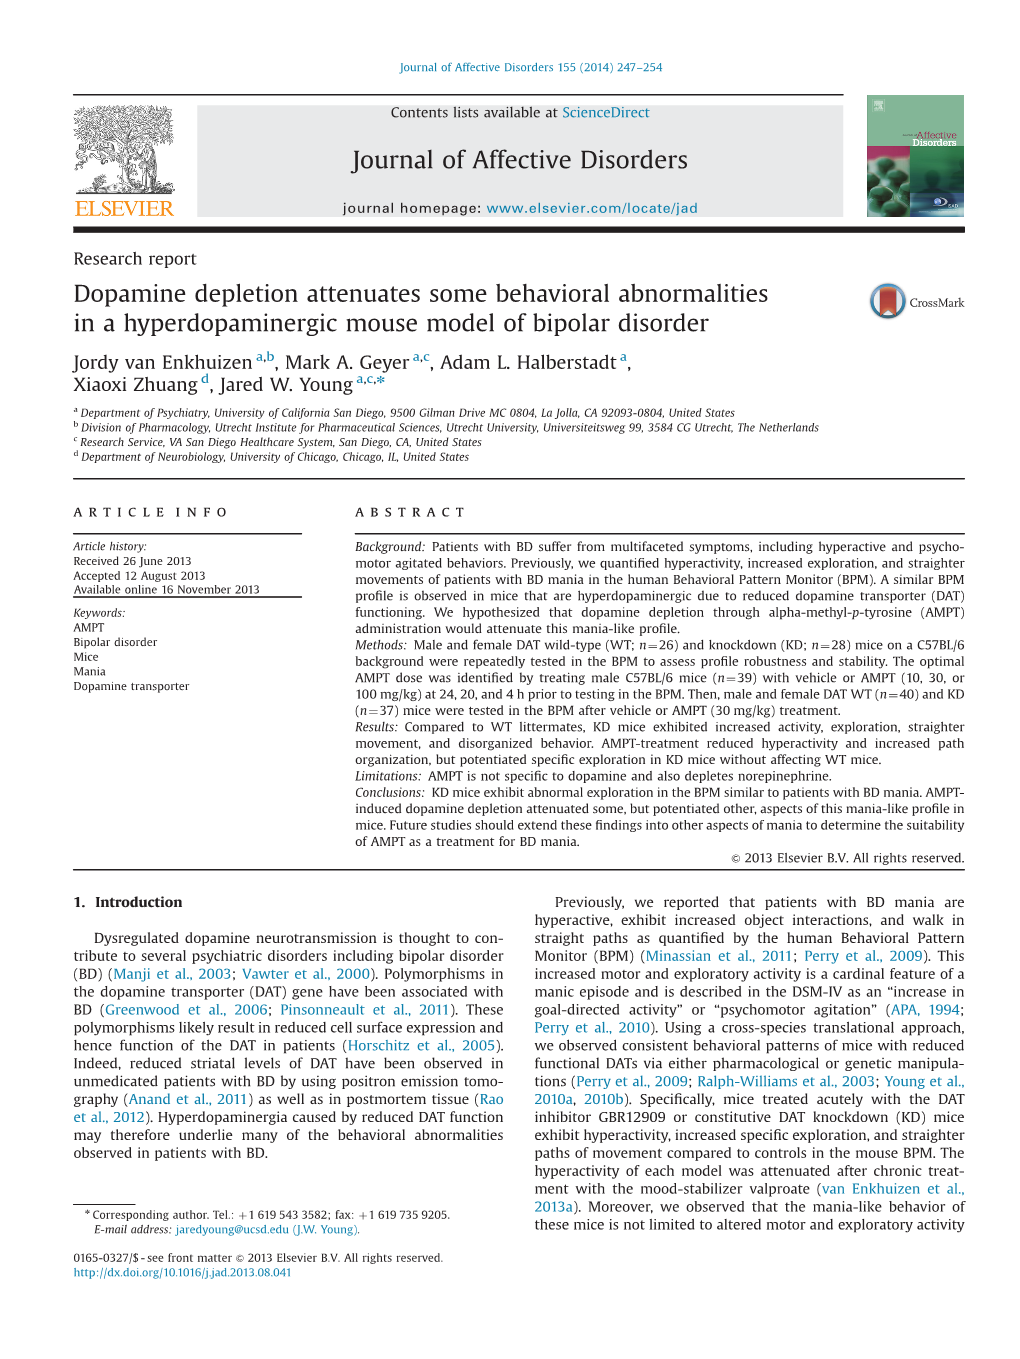 Dopamine Depletion Attenuates Some Behavioral Abnormalities in a Hyperdopaminergic Mouse Model of Bipolar Disorder